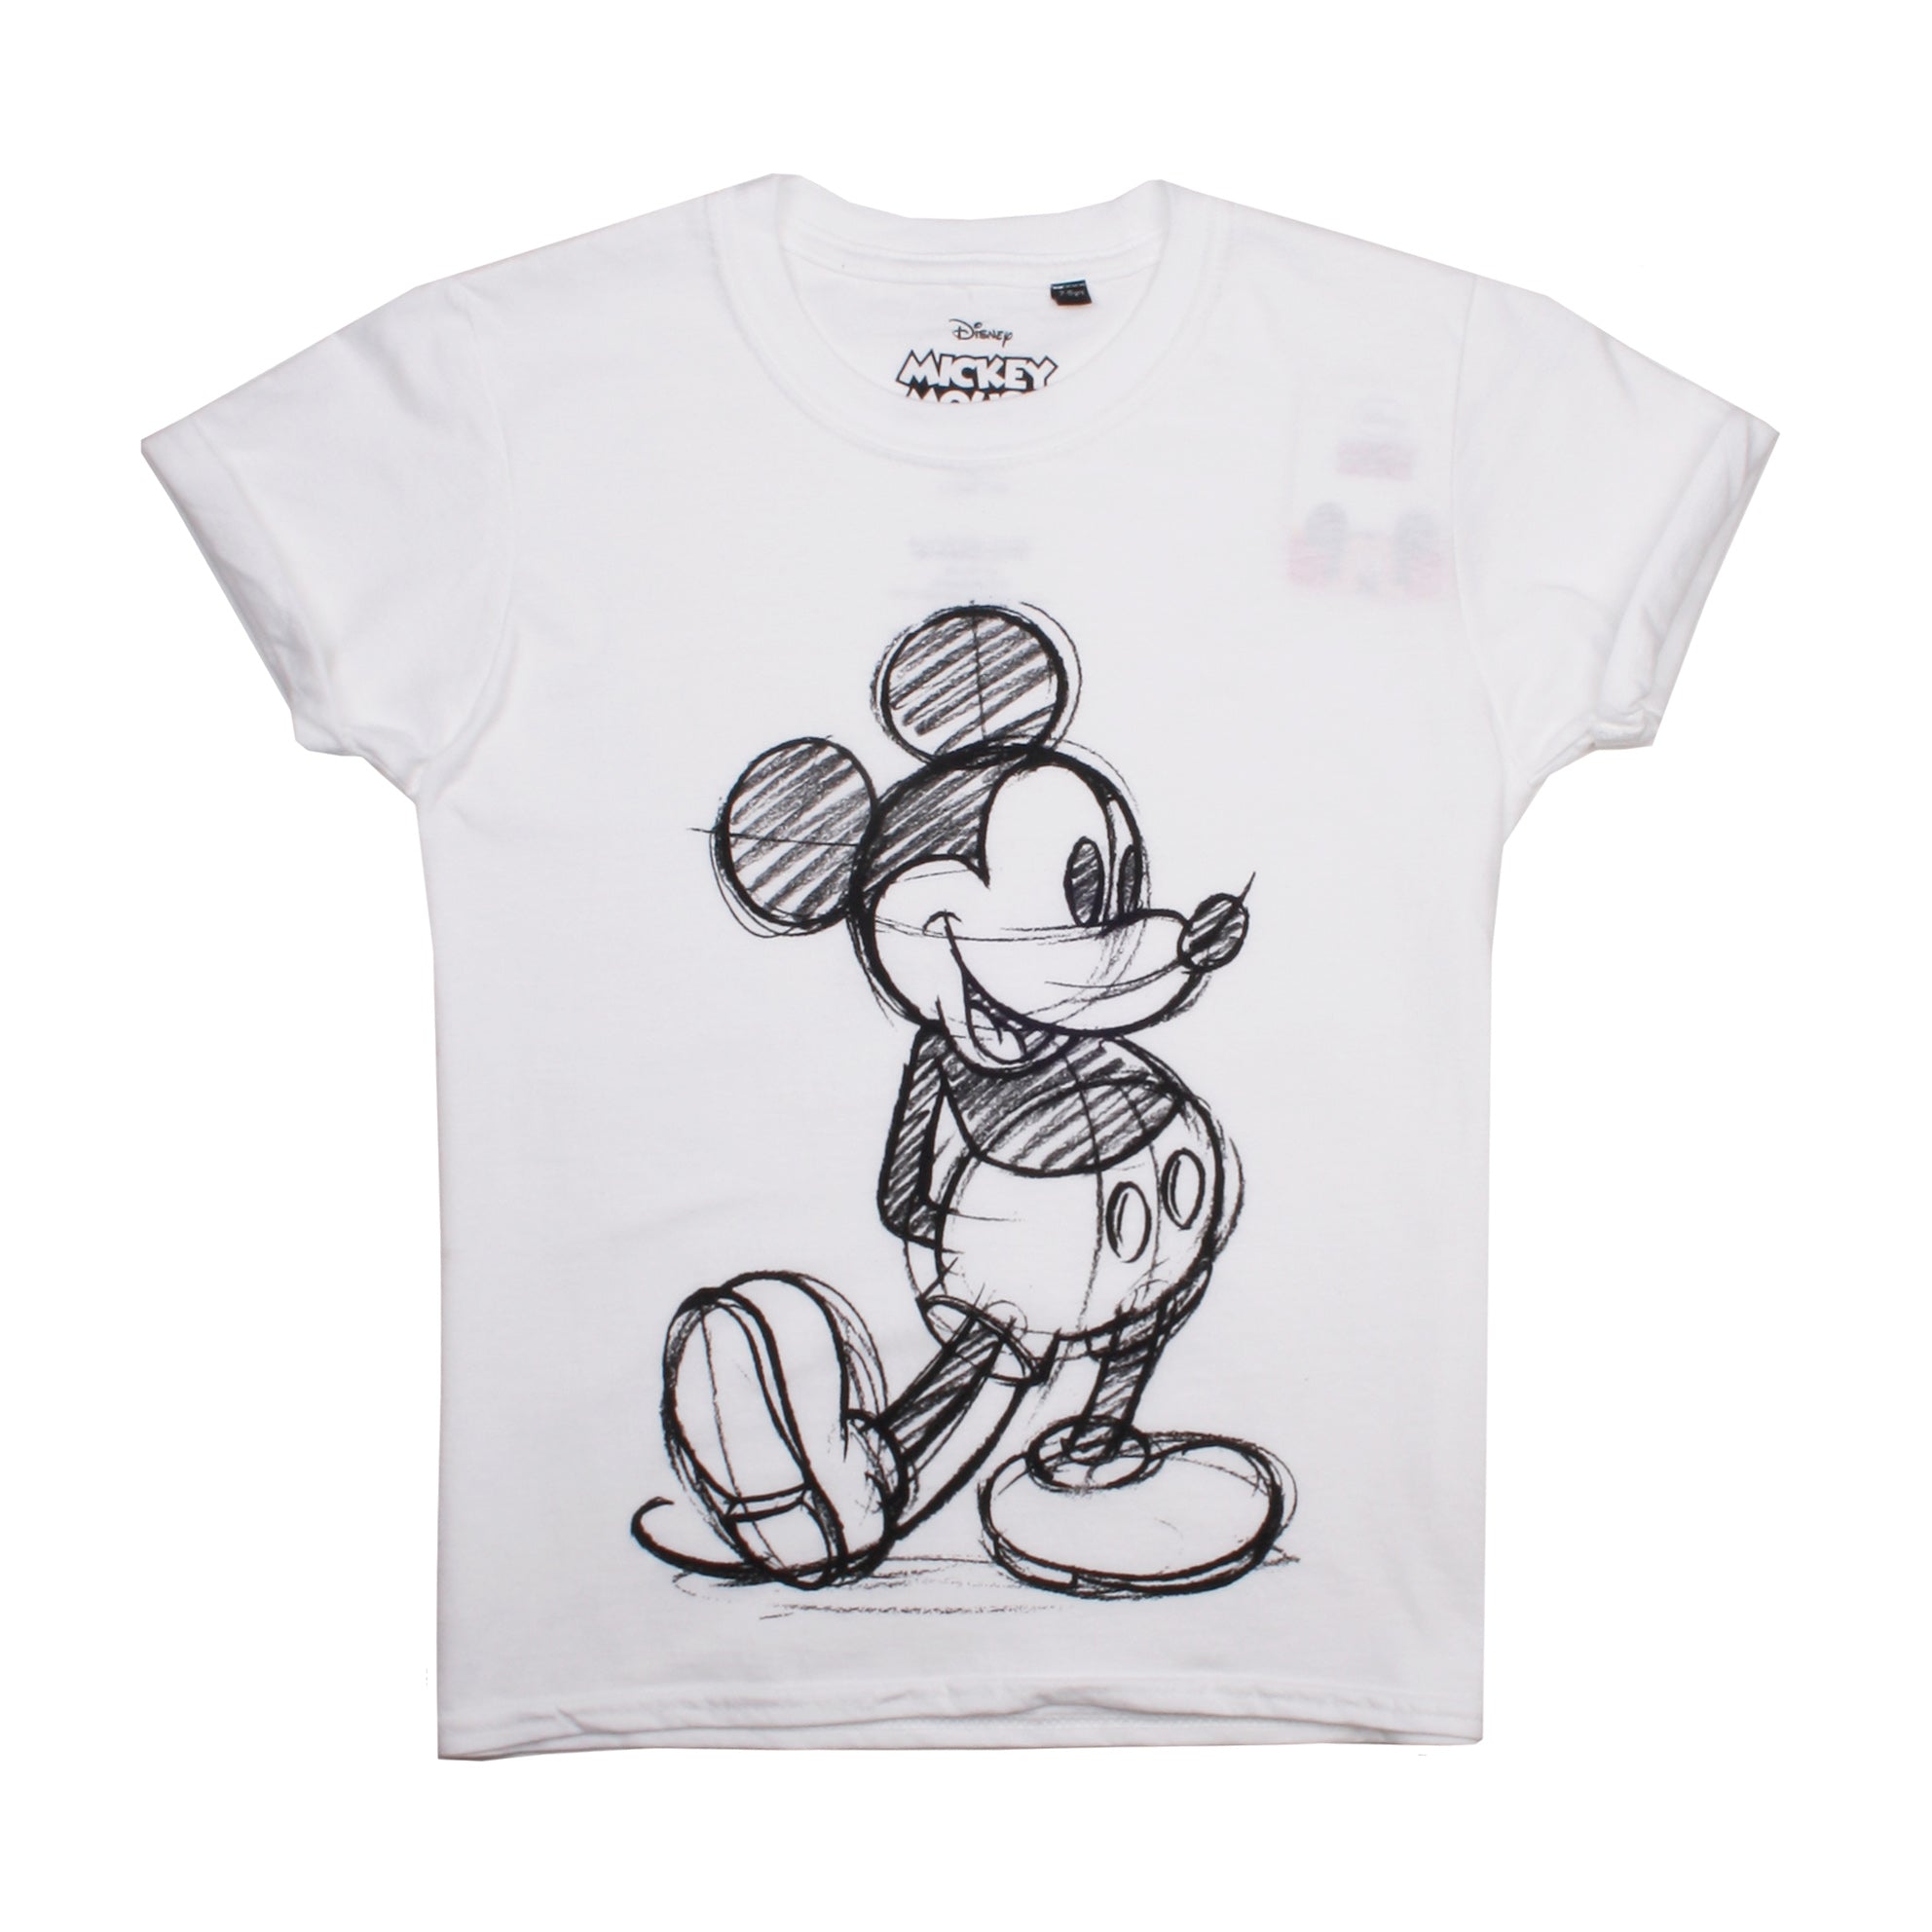 Buy Disney Unisex Tshirt Mickey Mouse Sketch Online in India  Etsy